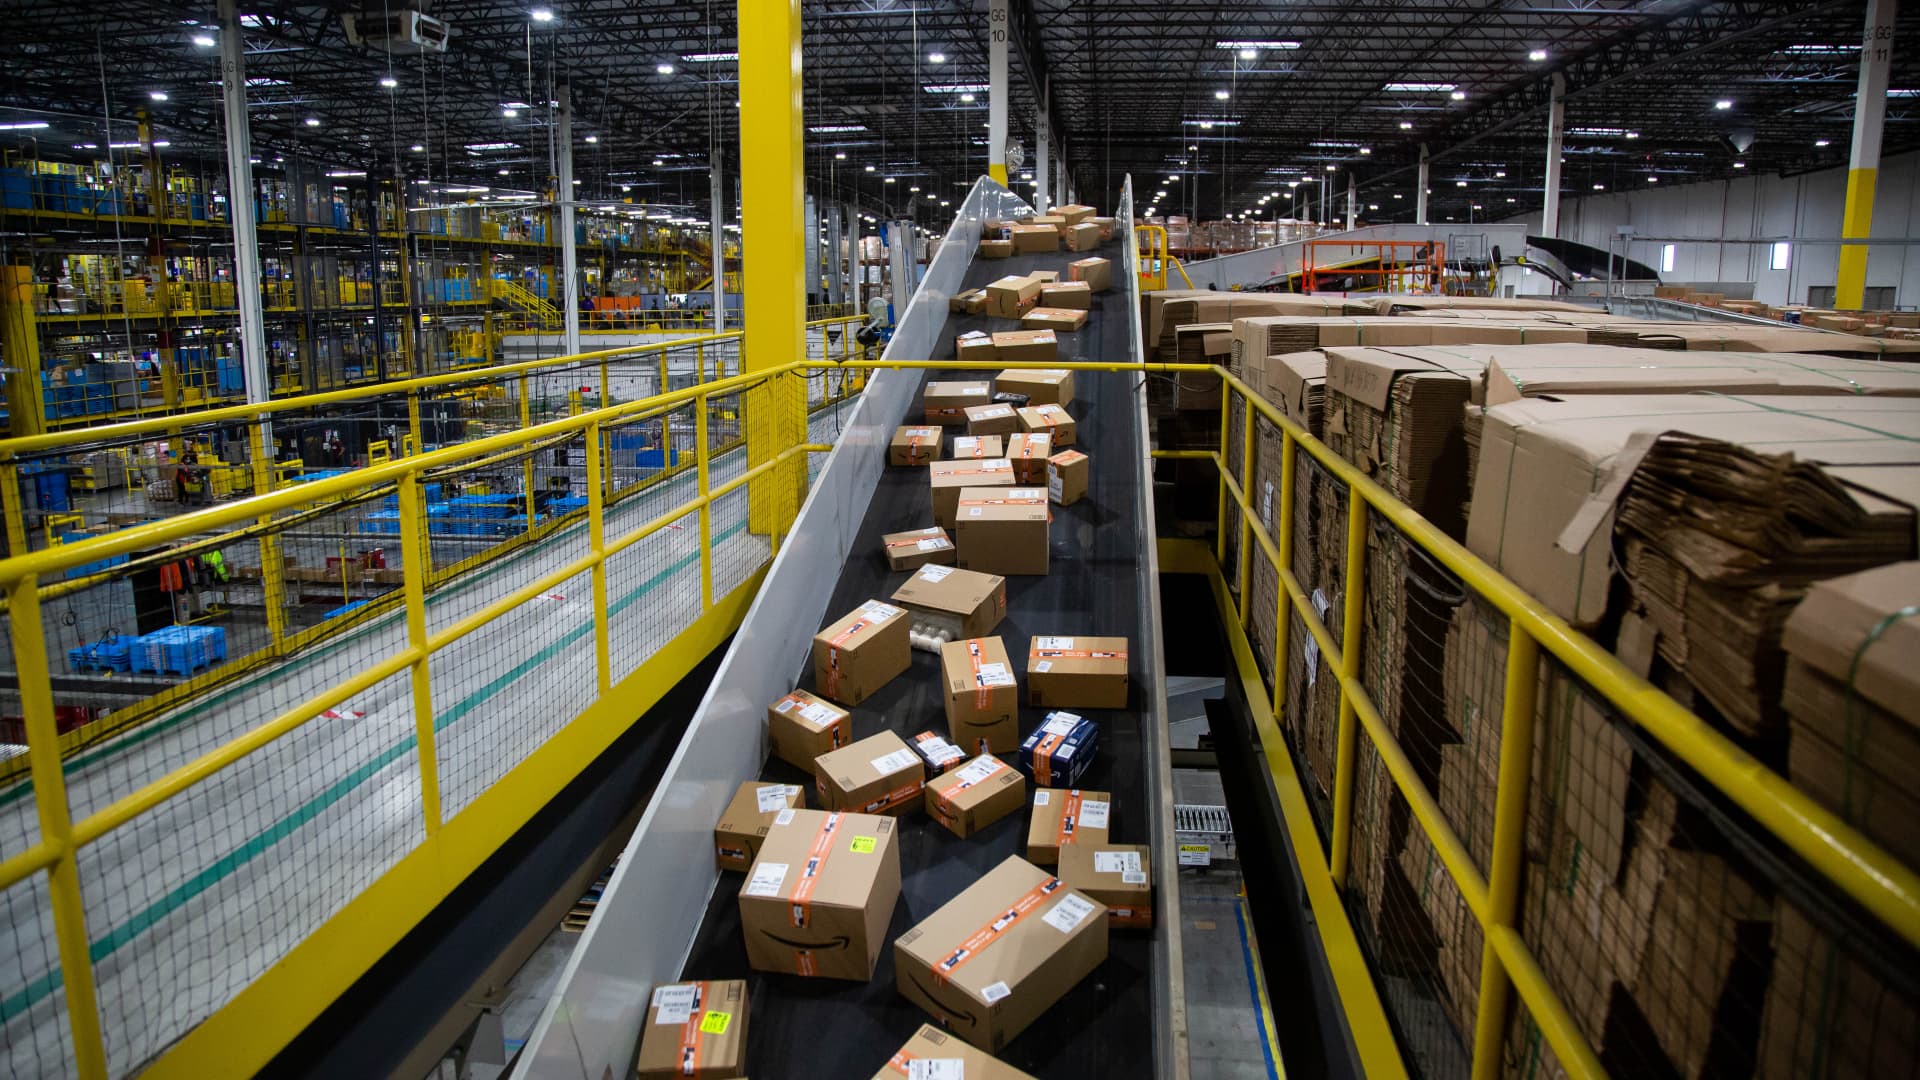 Amazon temporarily closes some Florida warehouses as Hurricane Ian approaches